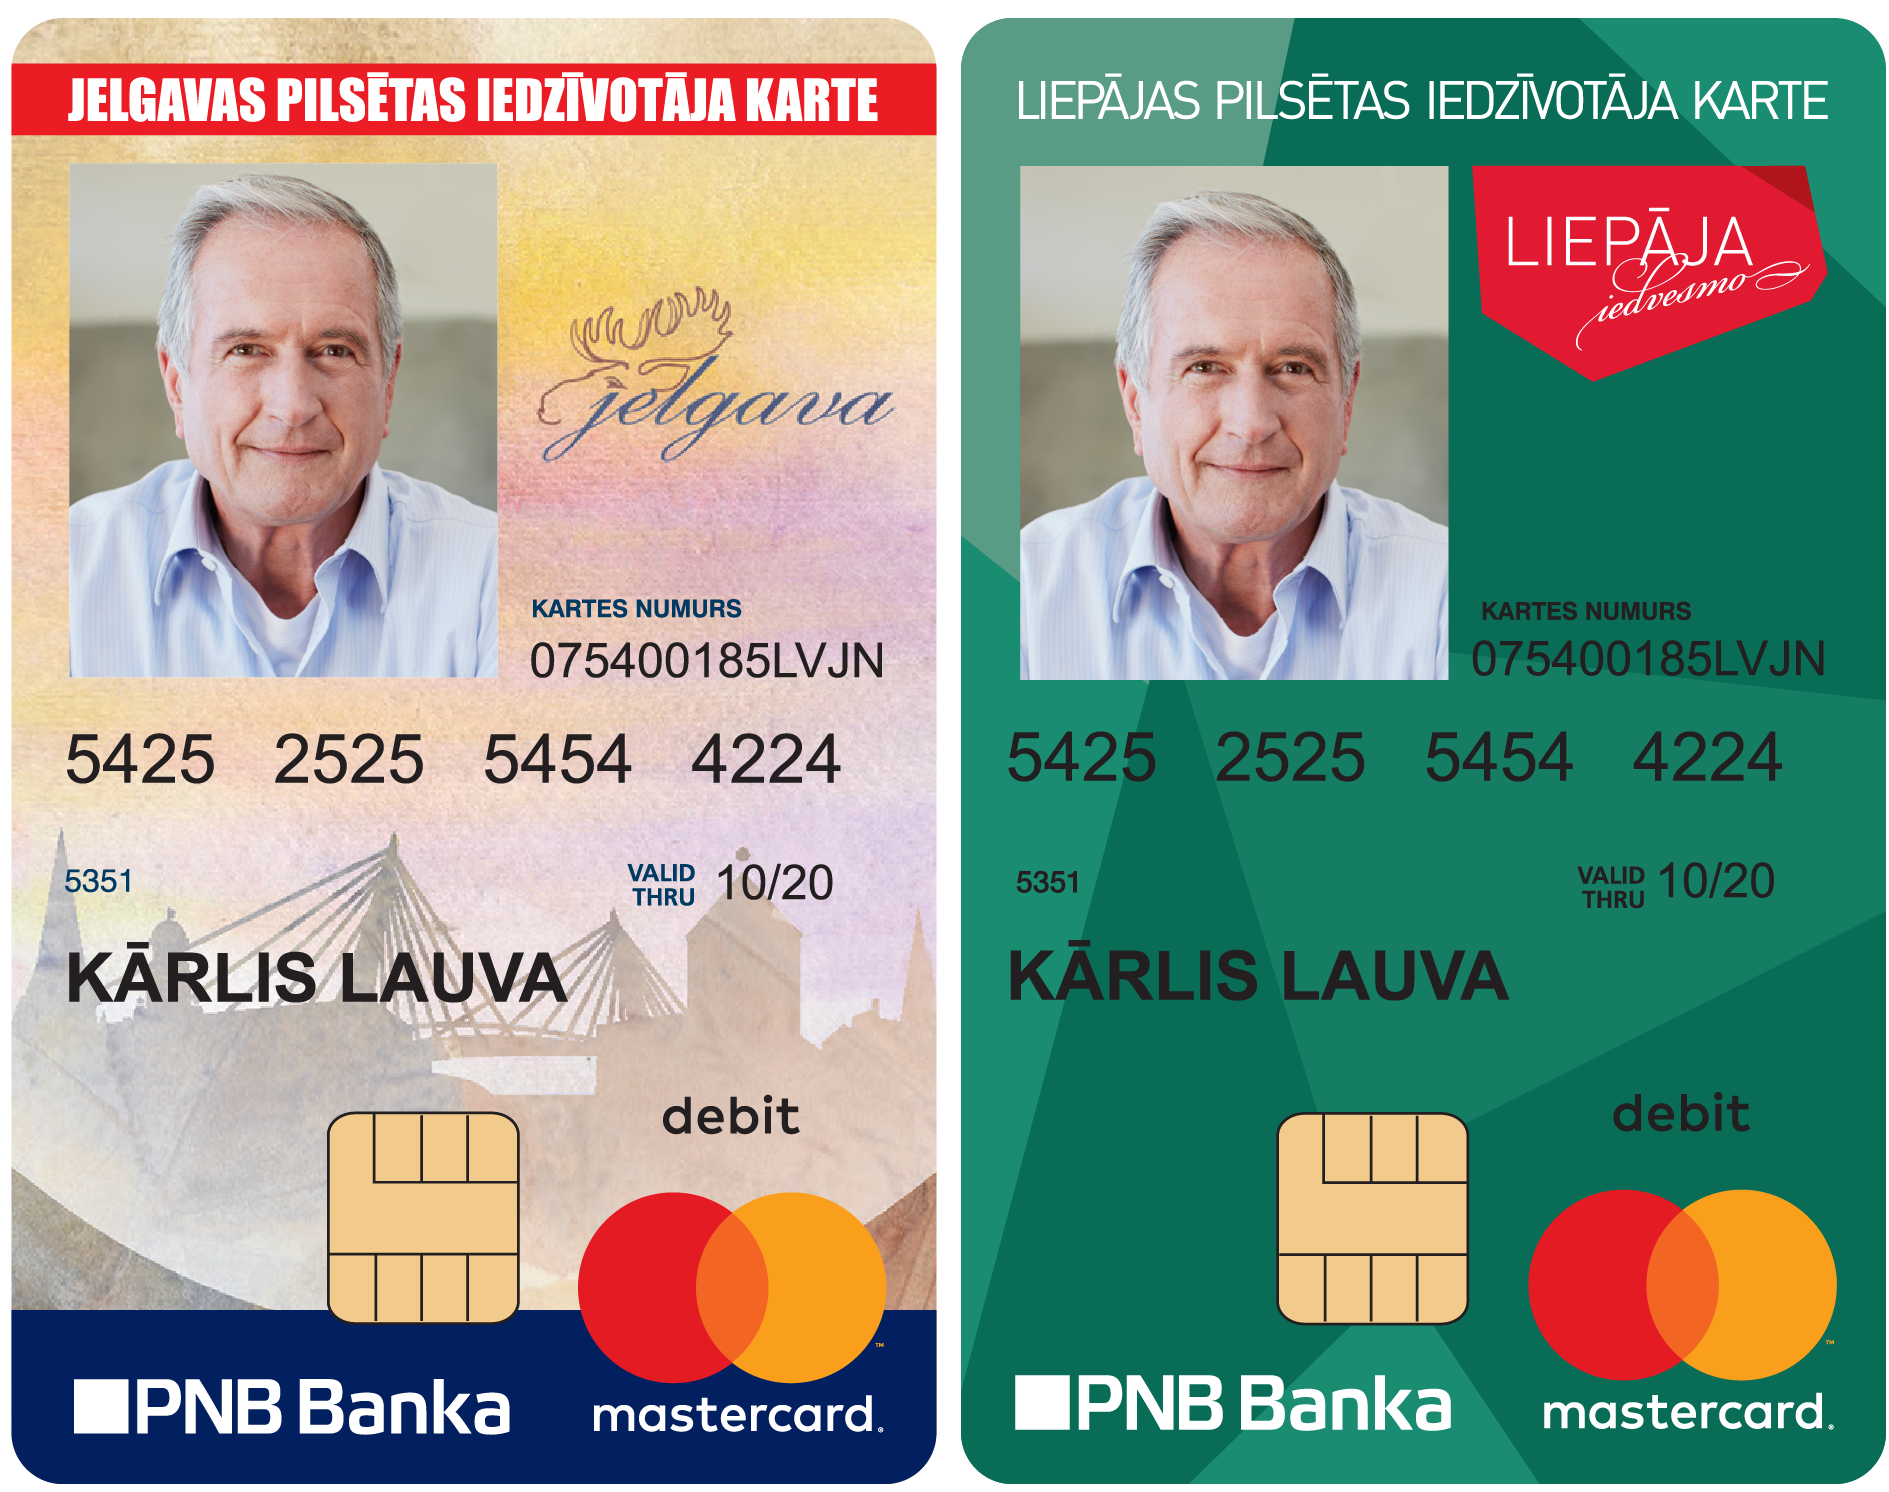 Cards - AS PNB BANKA